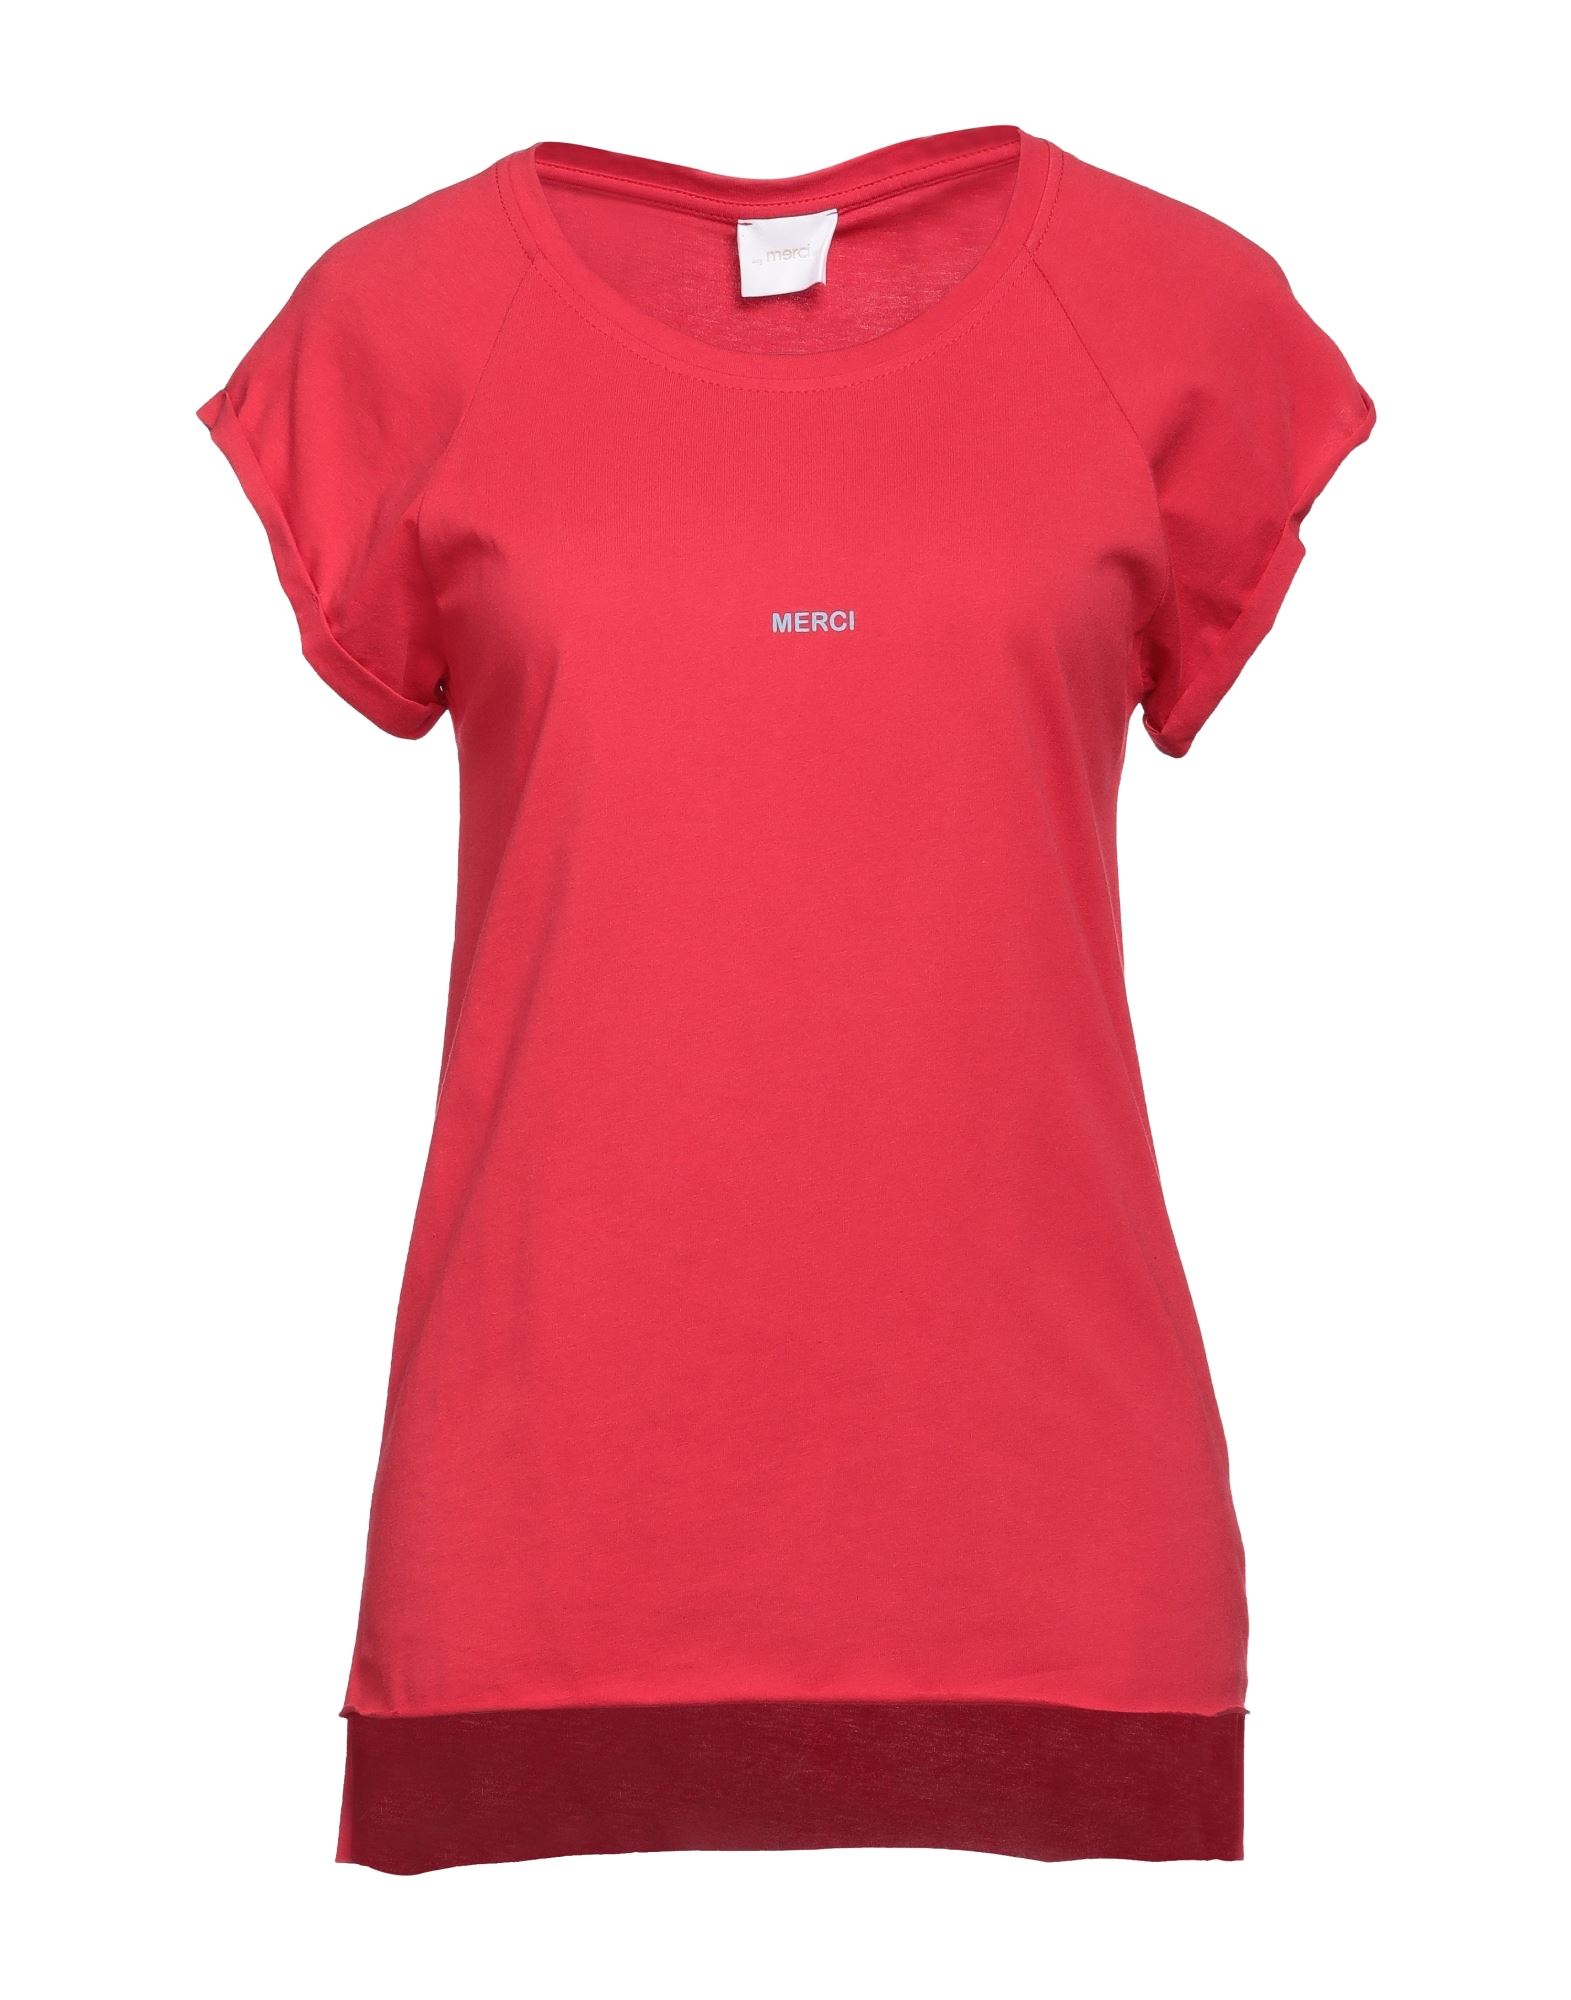 Merci .., Woman T-shirt Red Size S Cotton